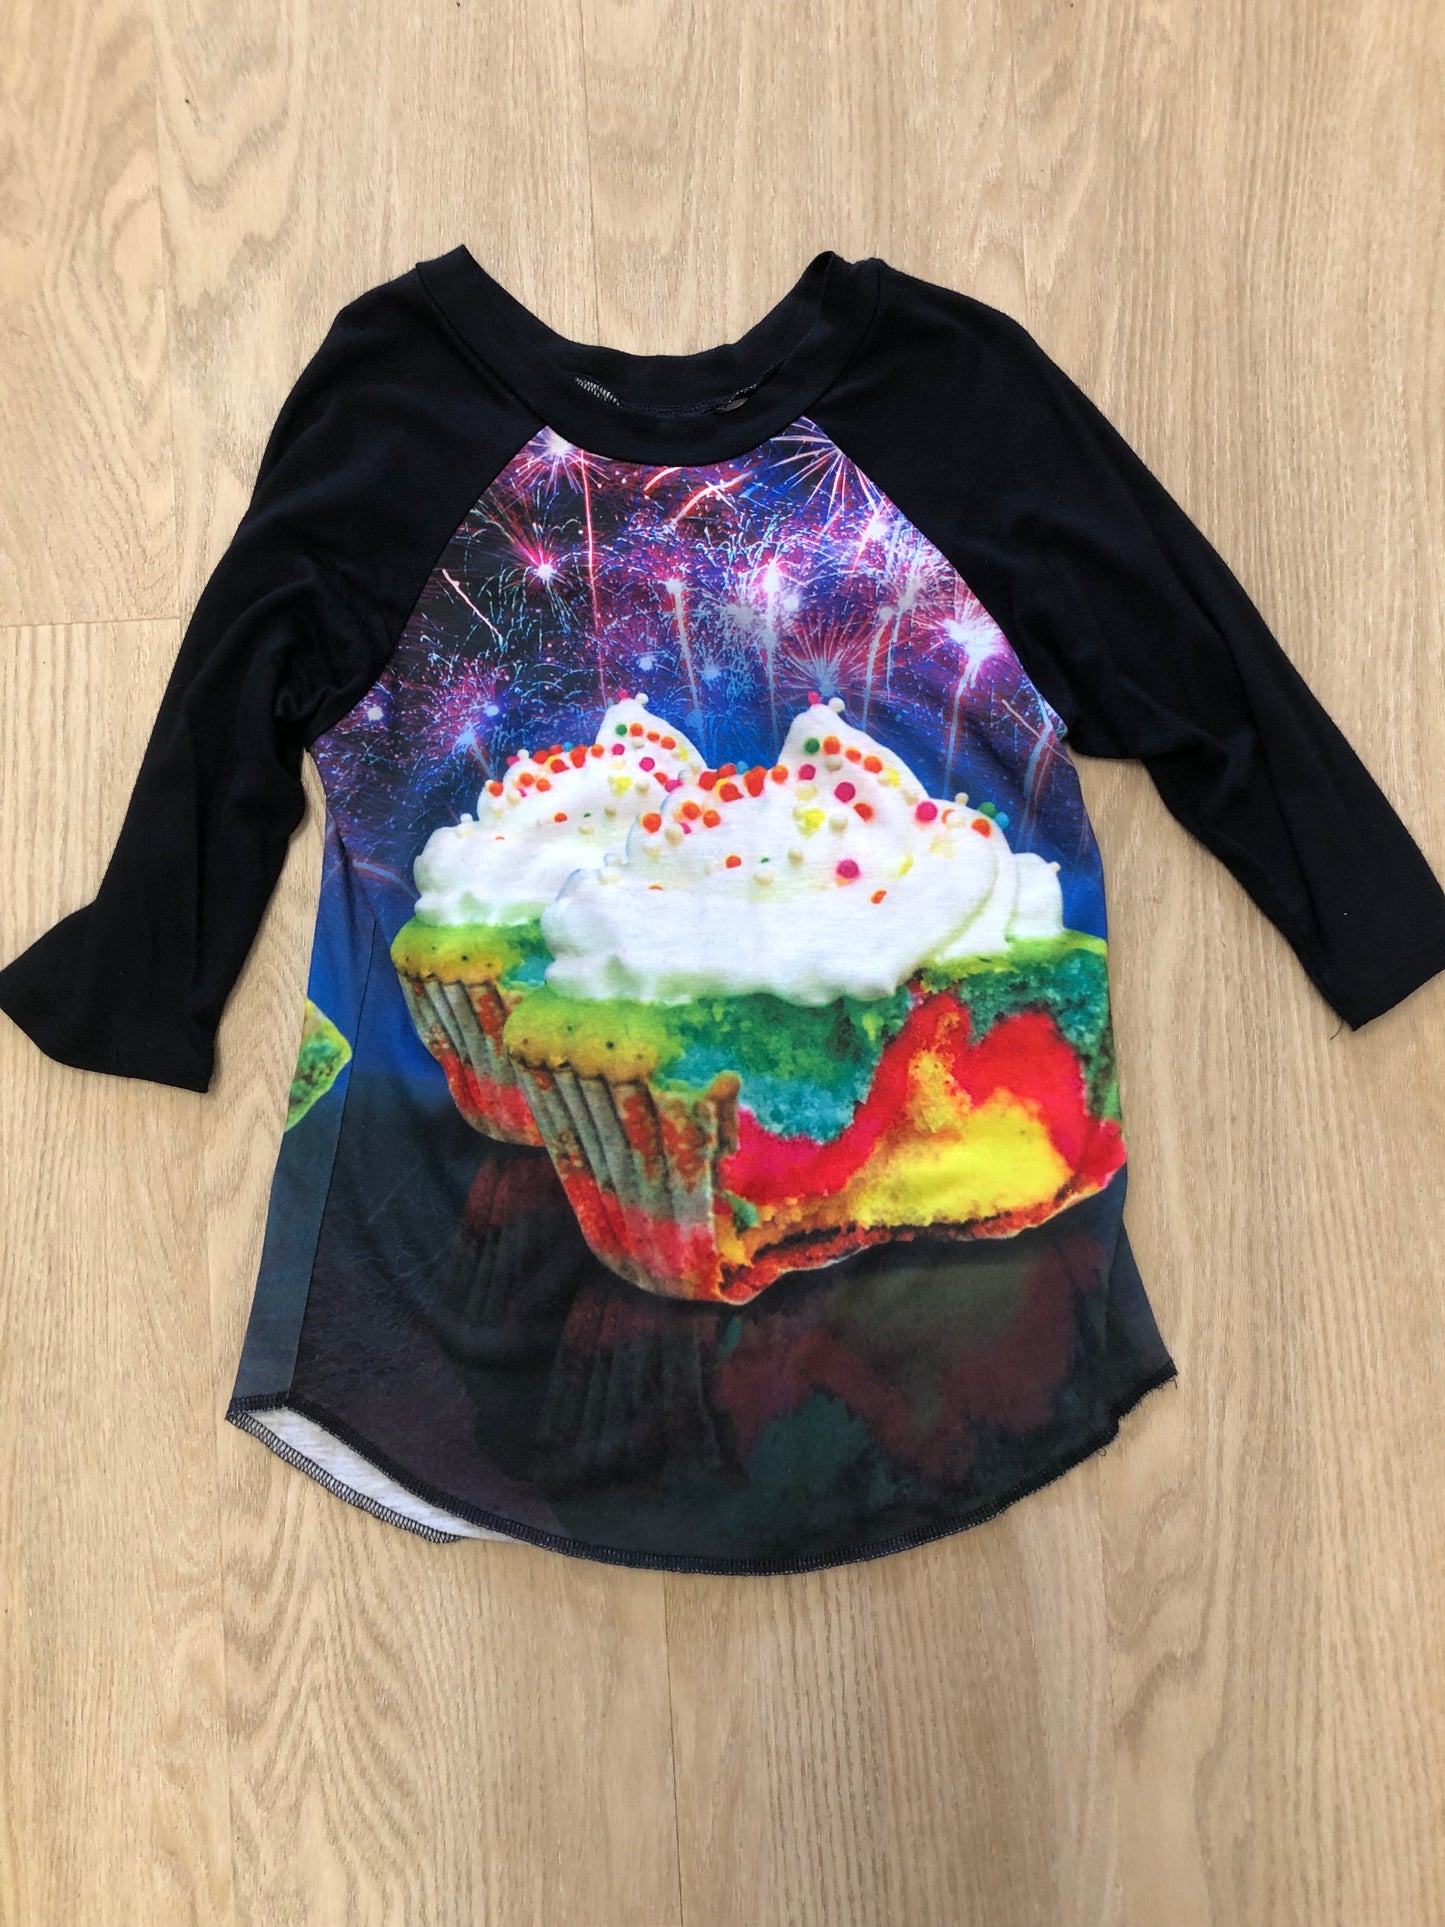 Zara Terez Child Size 8 Black Cupcakes Shirt